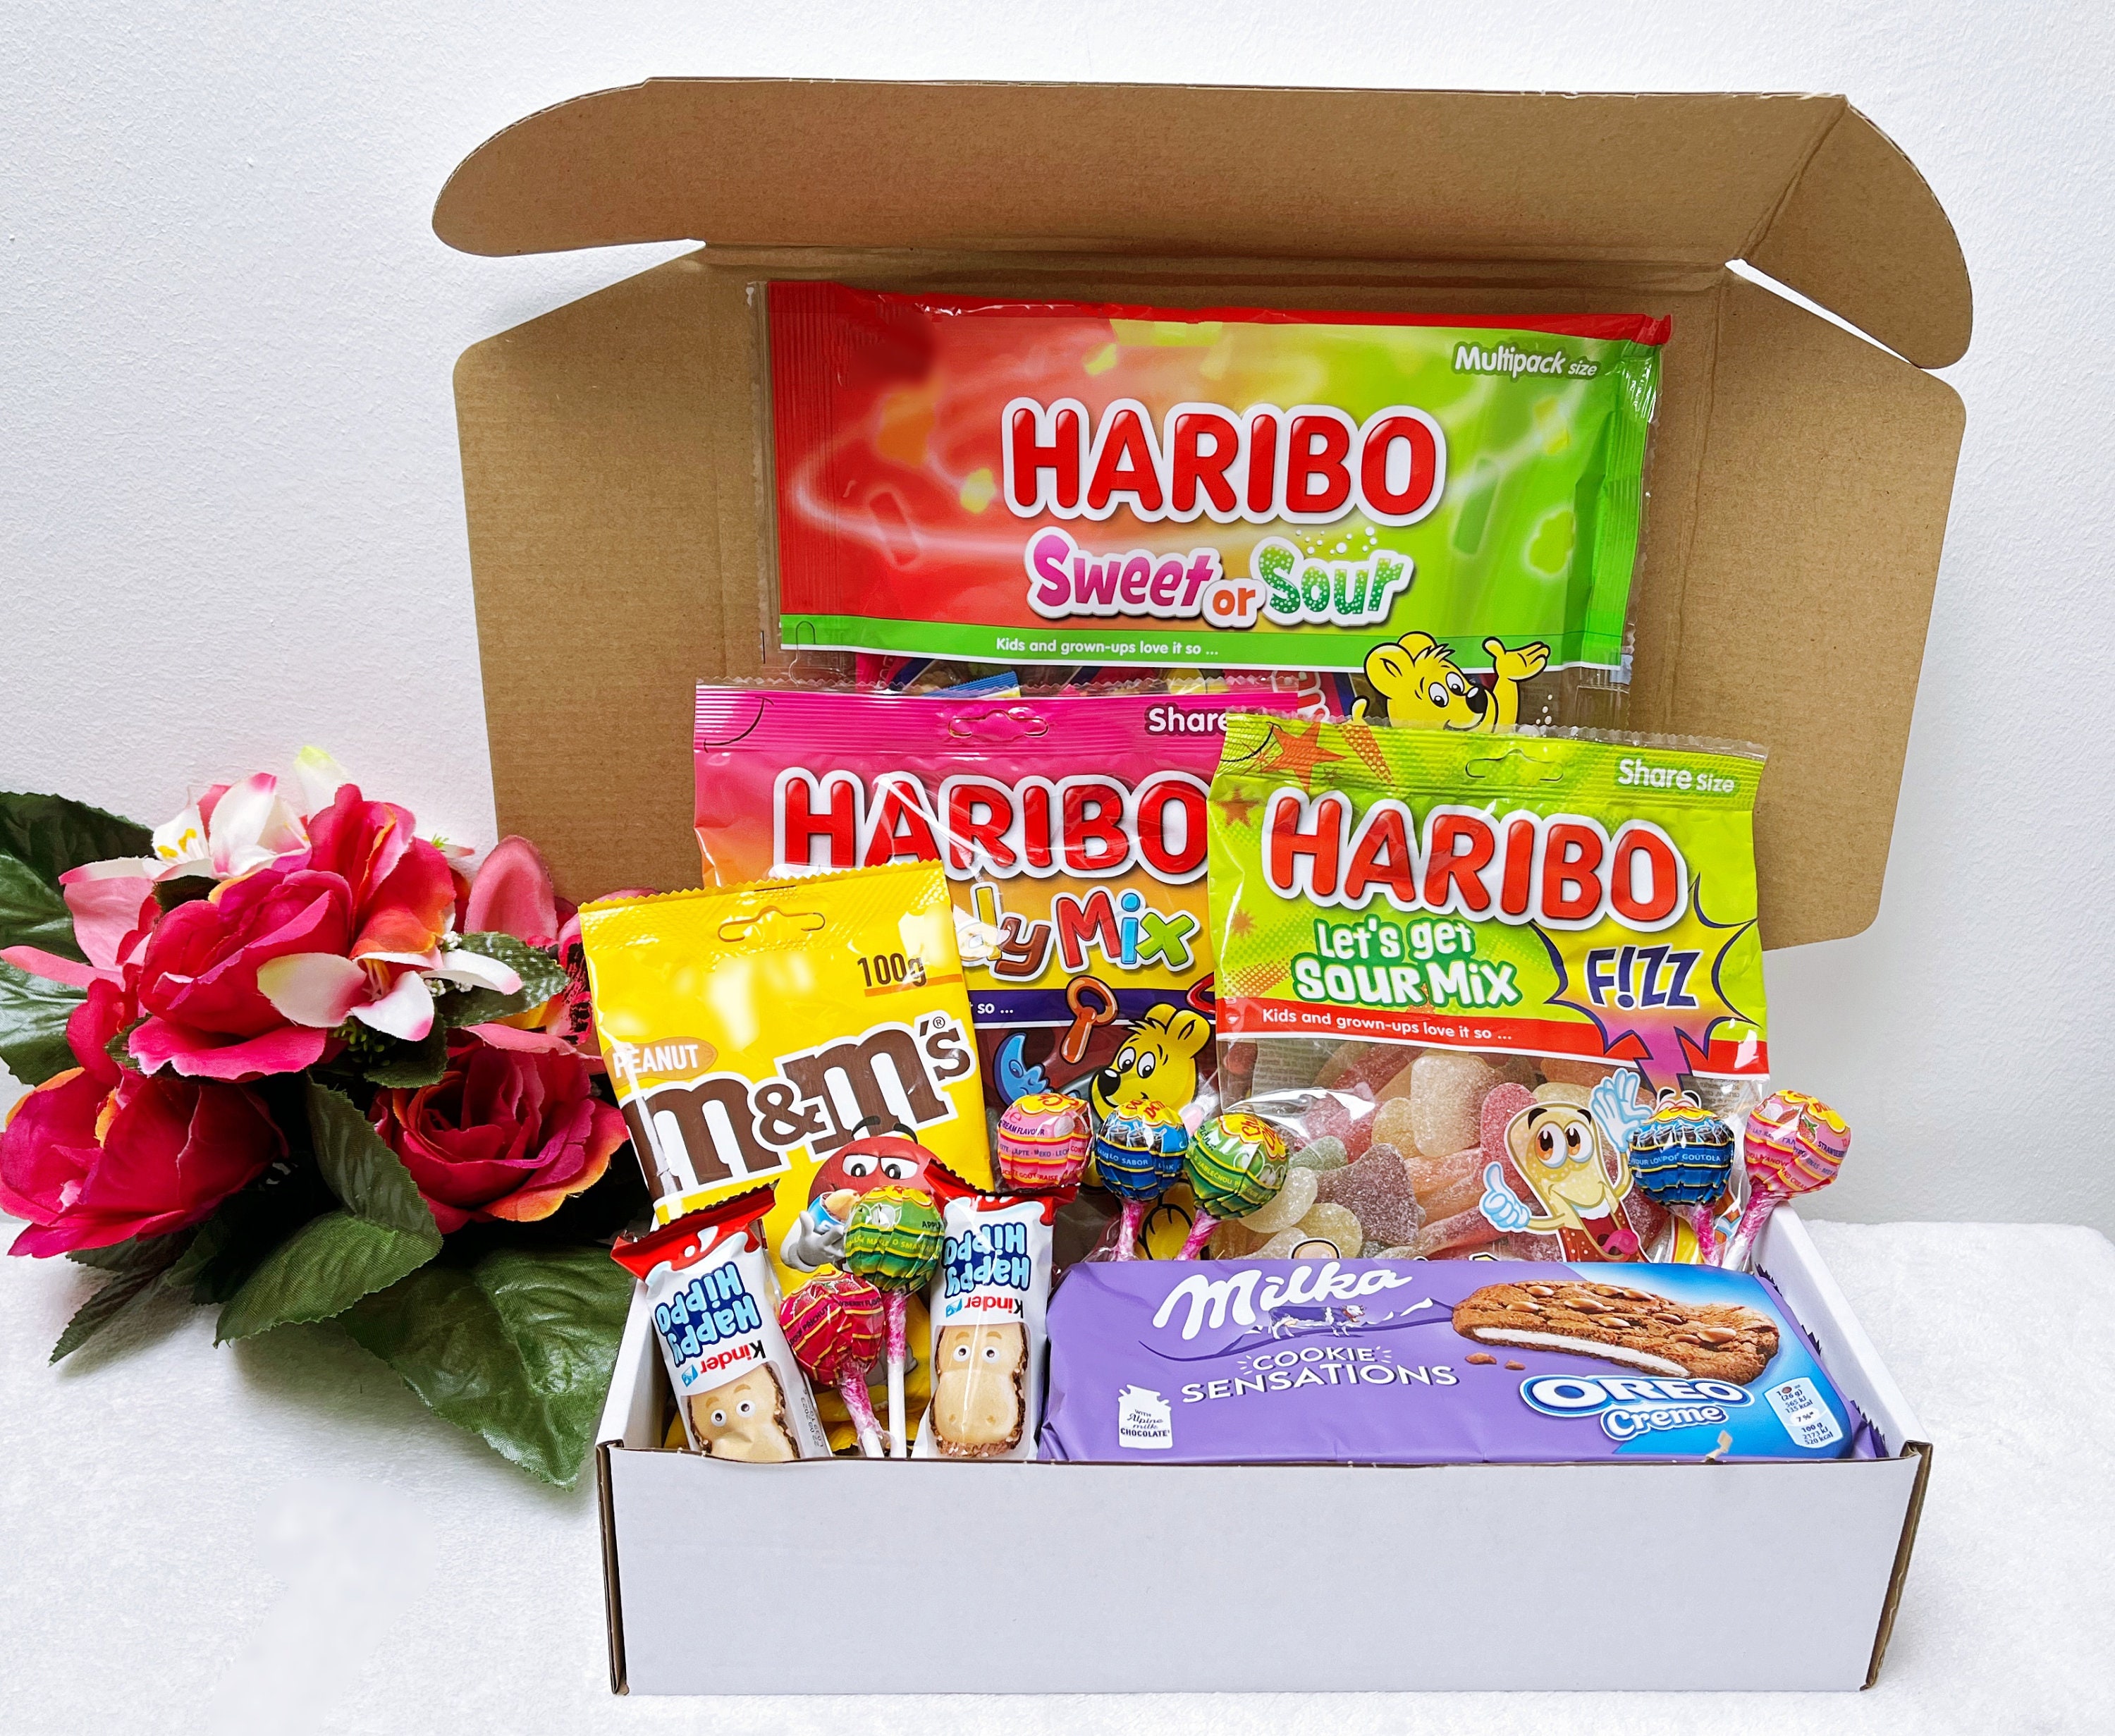 Mini Box bonbons personnalisée – Meringue and co